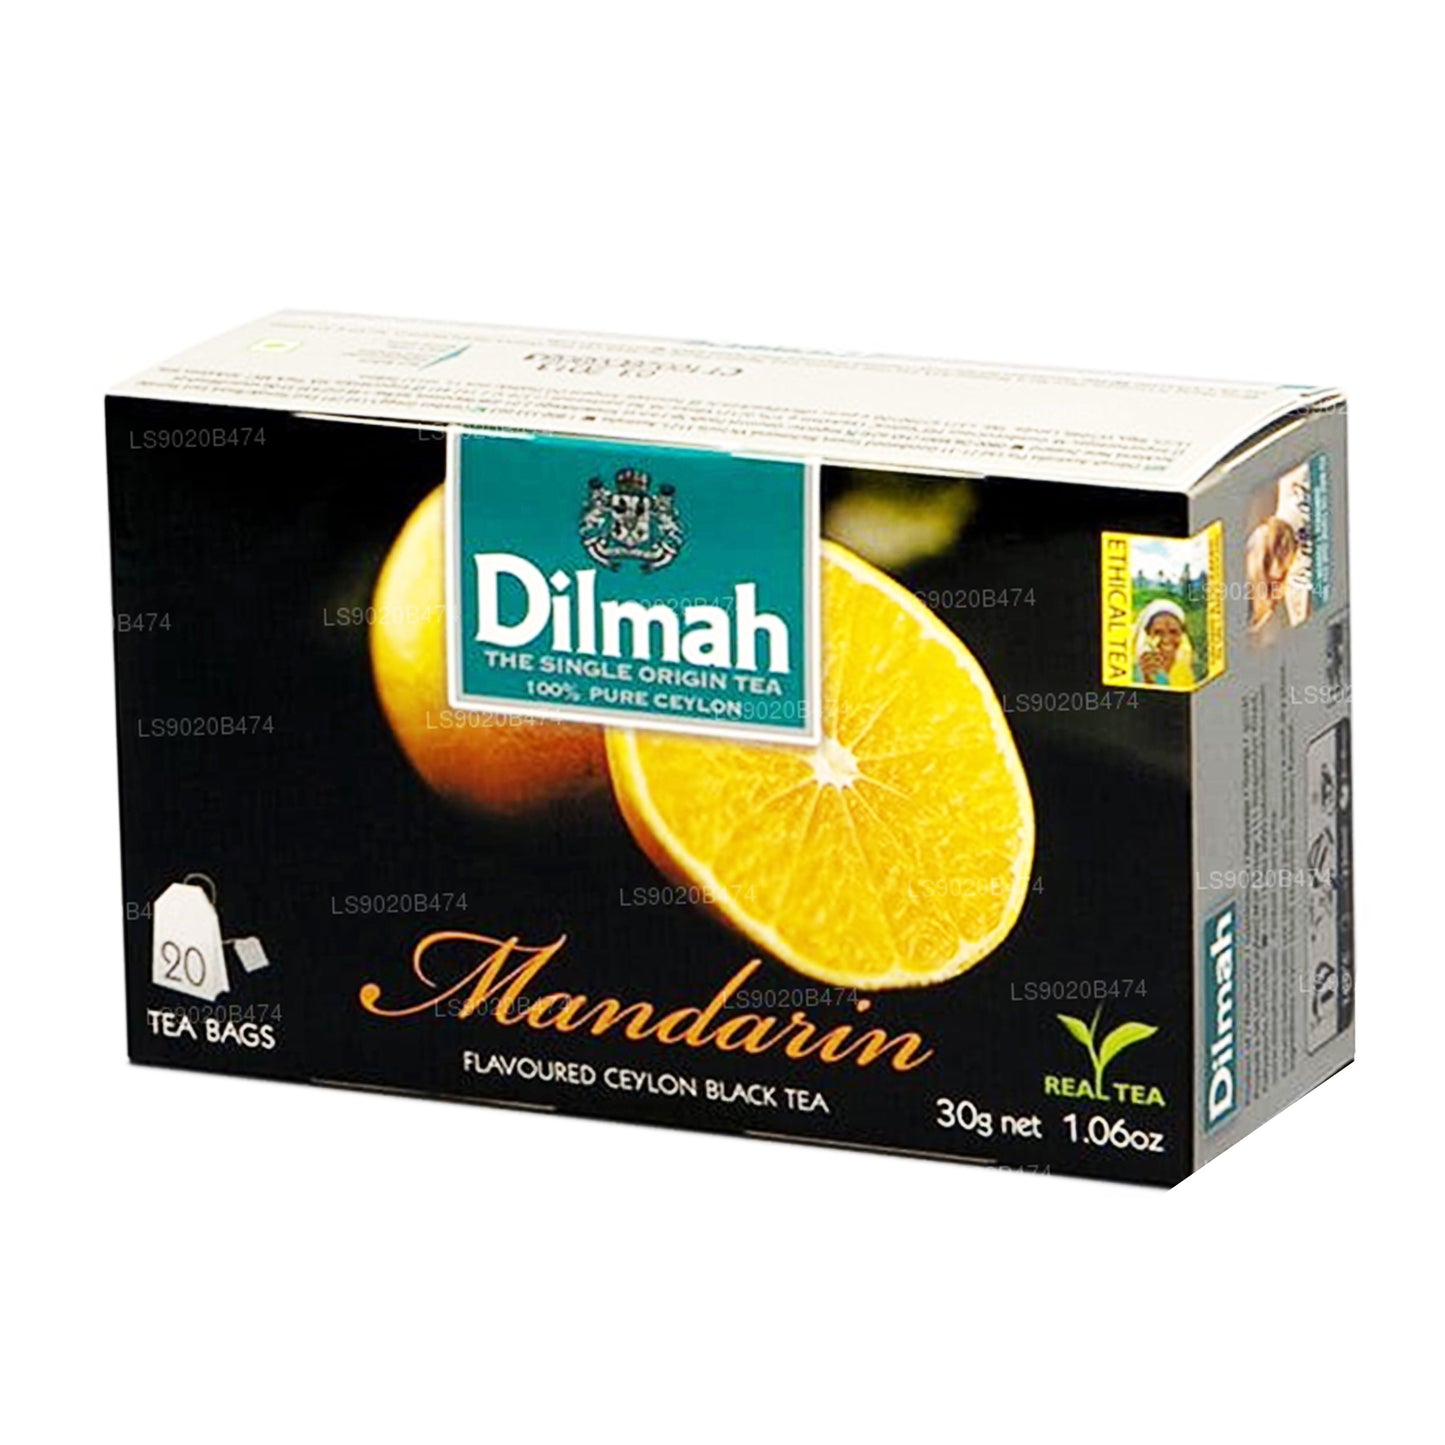 Thé aromatisé à la mandarine Dilmah (30g) 20 sachets